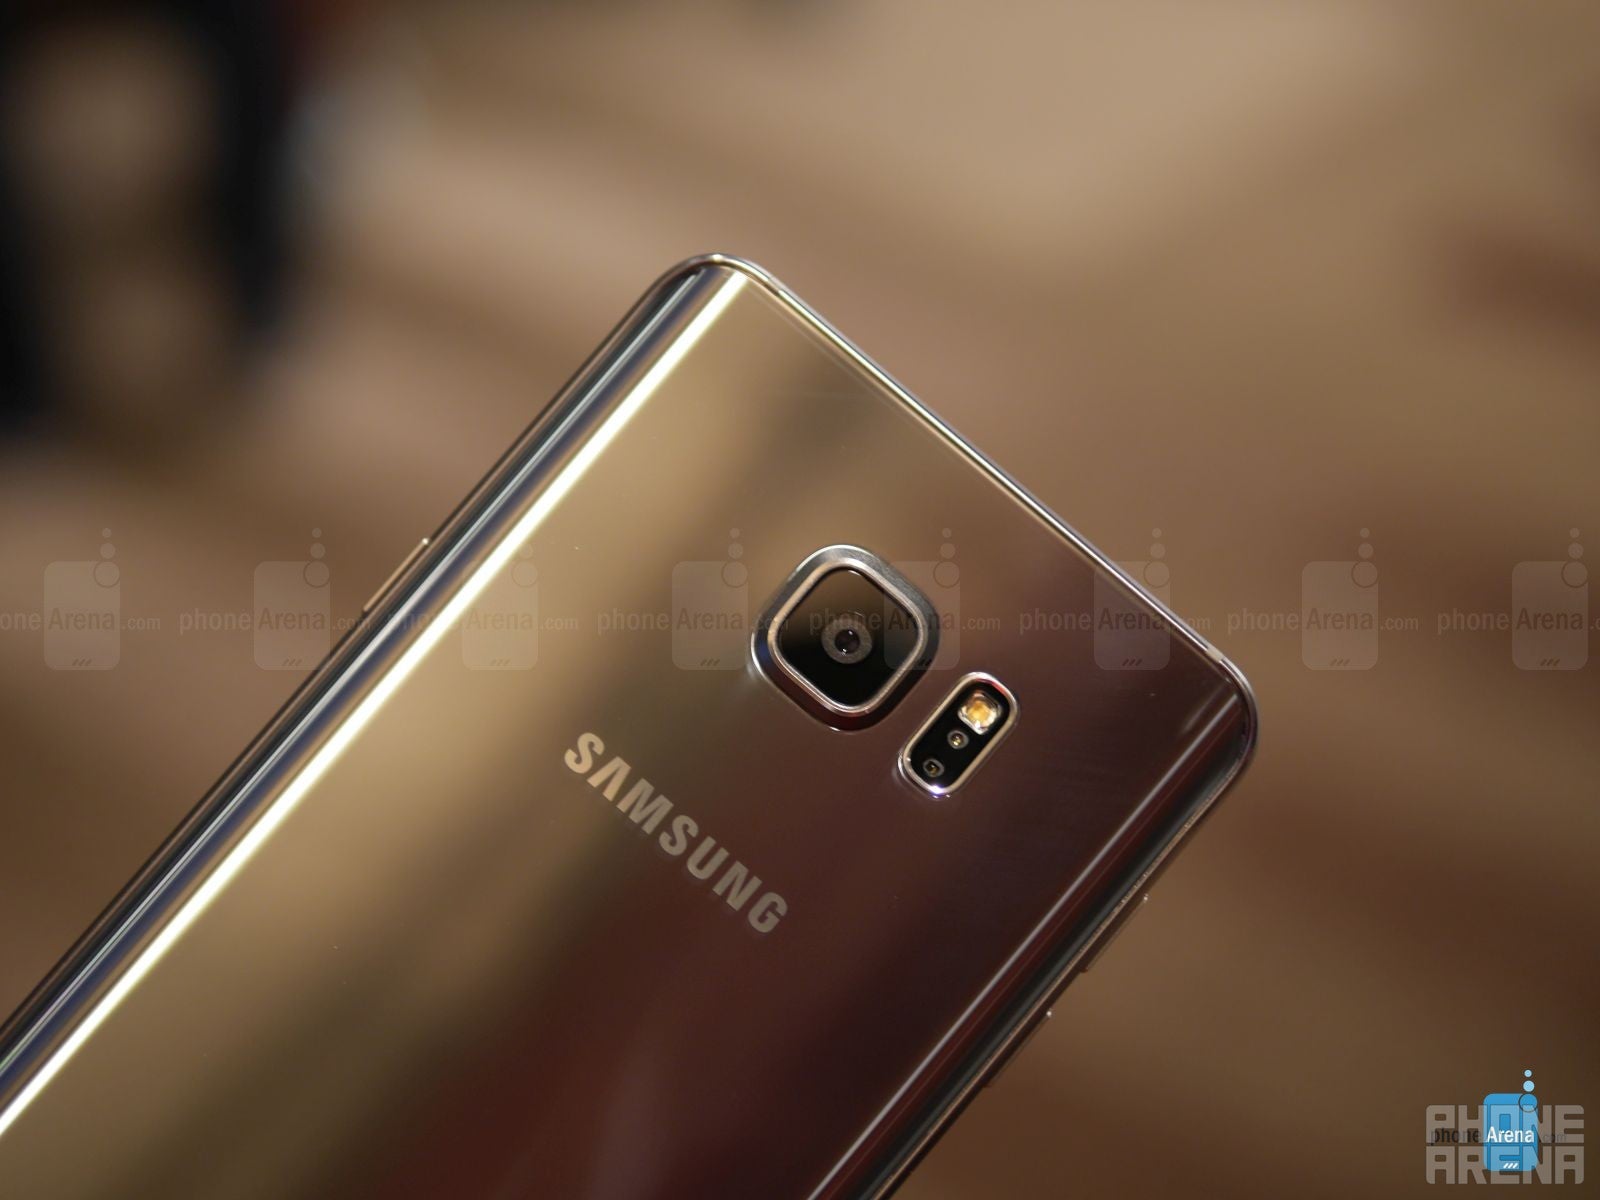 Samsung Galaxy Note5 hands-on